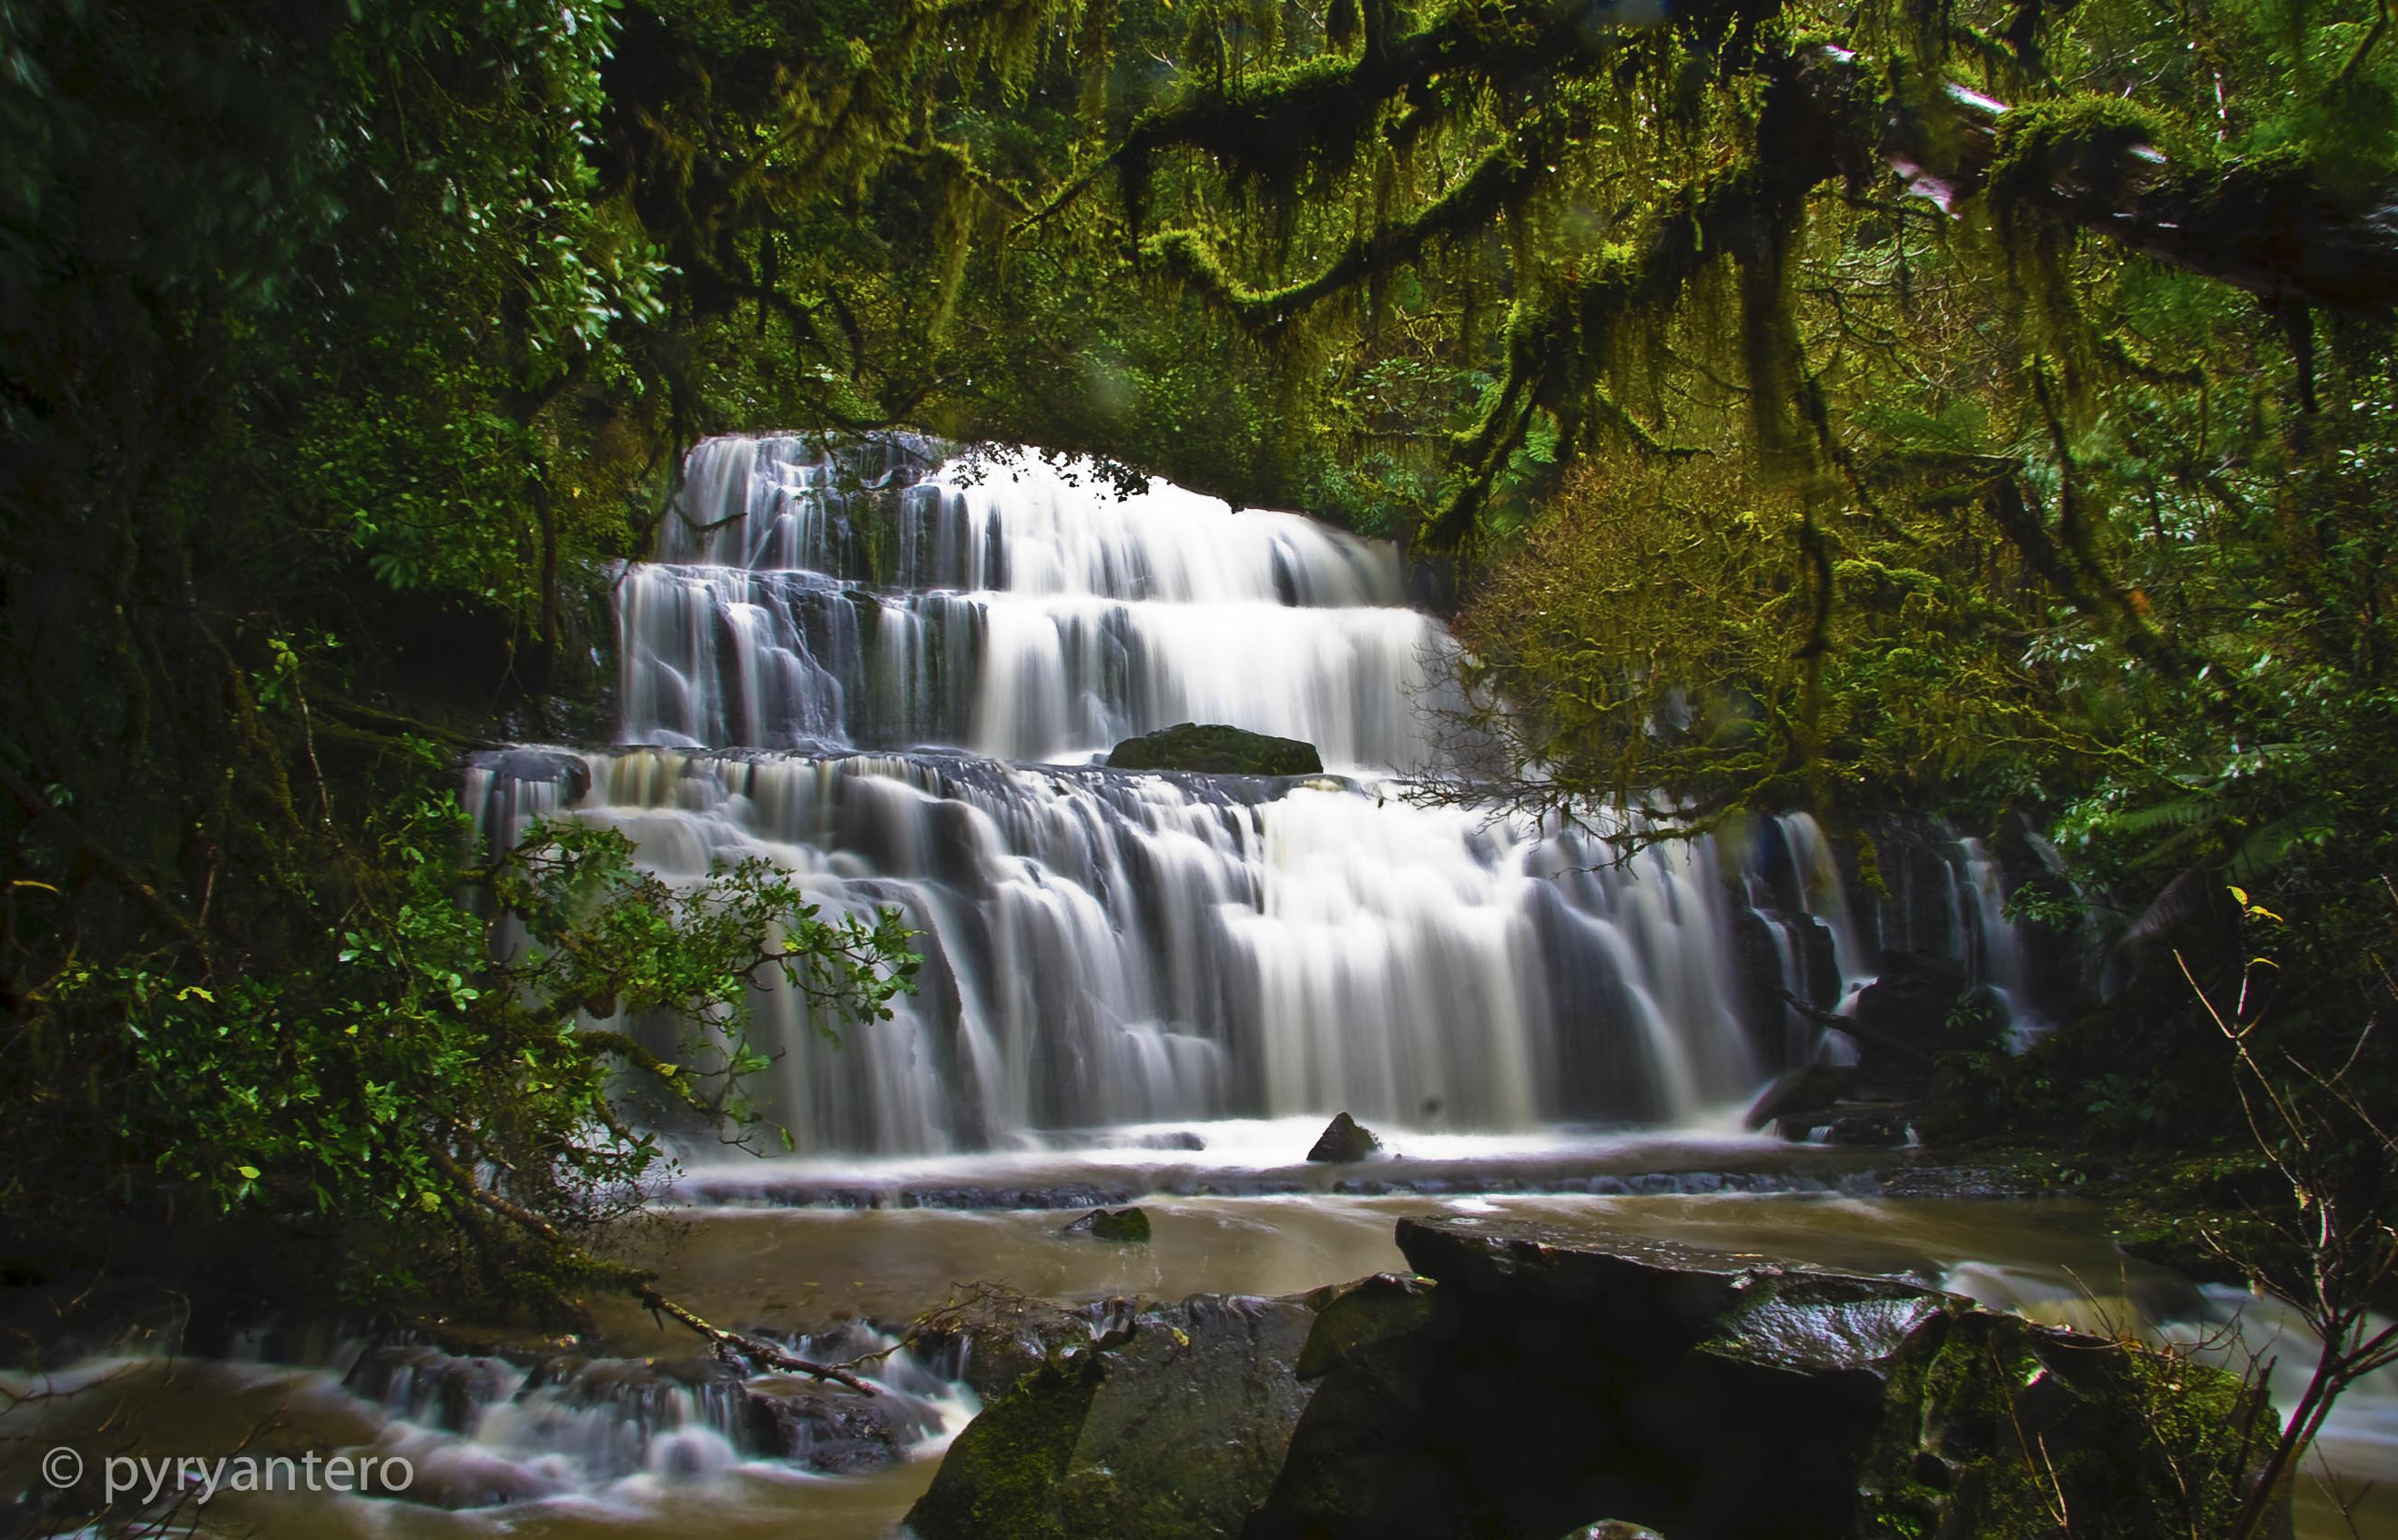 Purakaunui Falls in Catlins, Southland, South Island, New Zealand. Pyry Antero Pietiläinen Photography, pyryantero